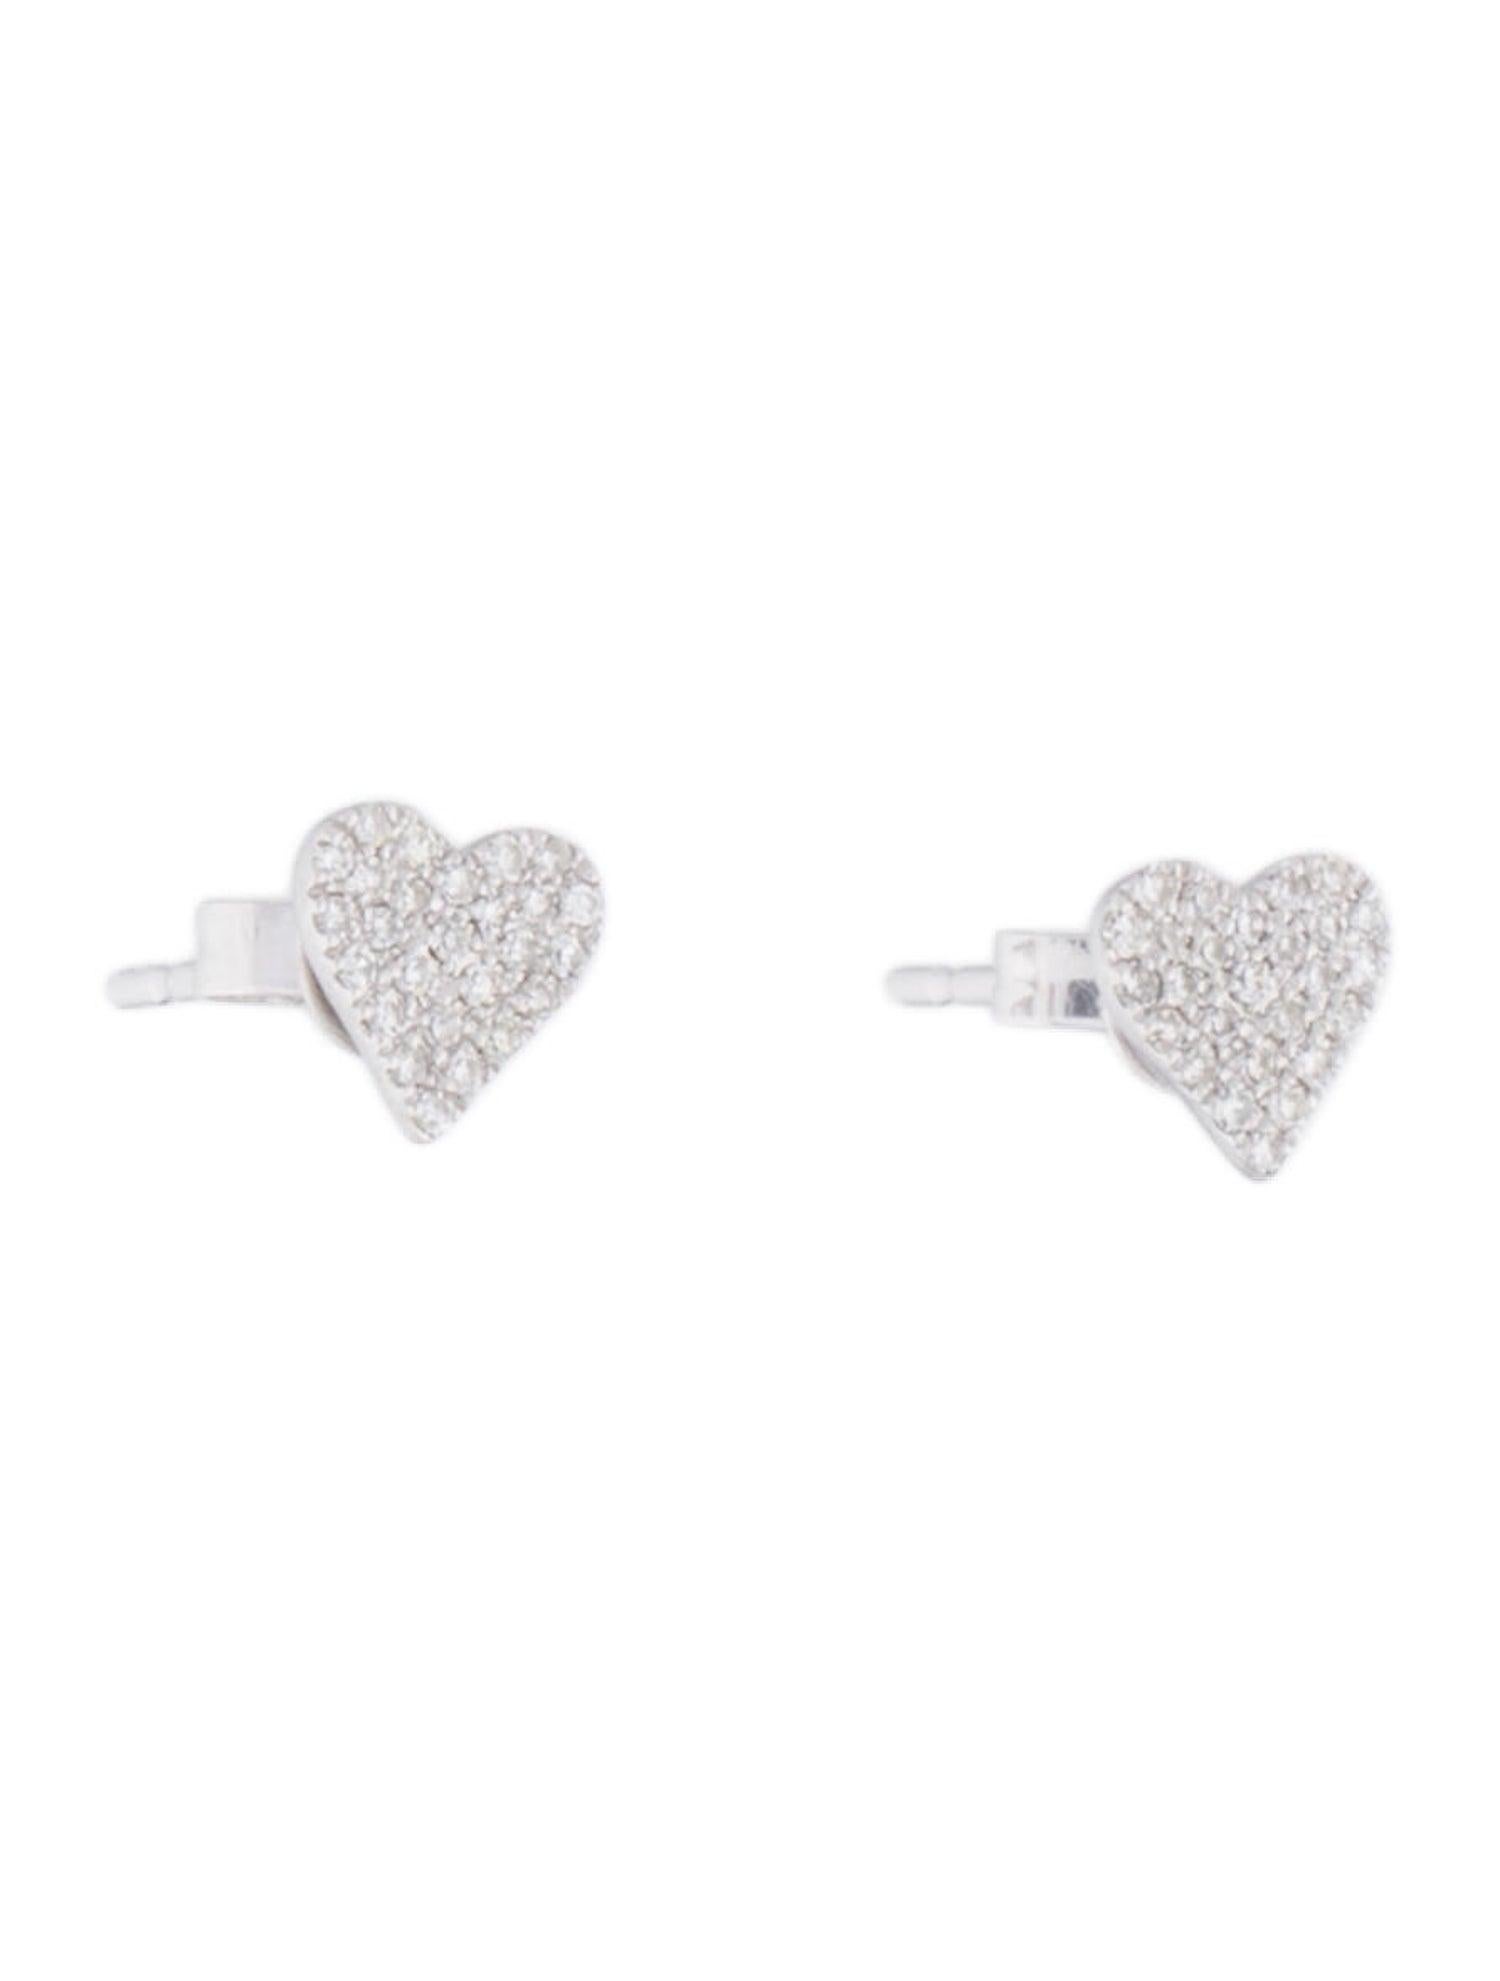 Round Cut 14 Karat White Gold 0.10 Carat Diamond Heart Earrings For Sale